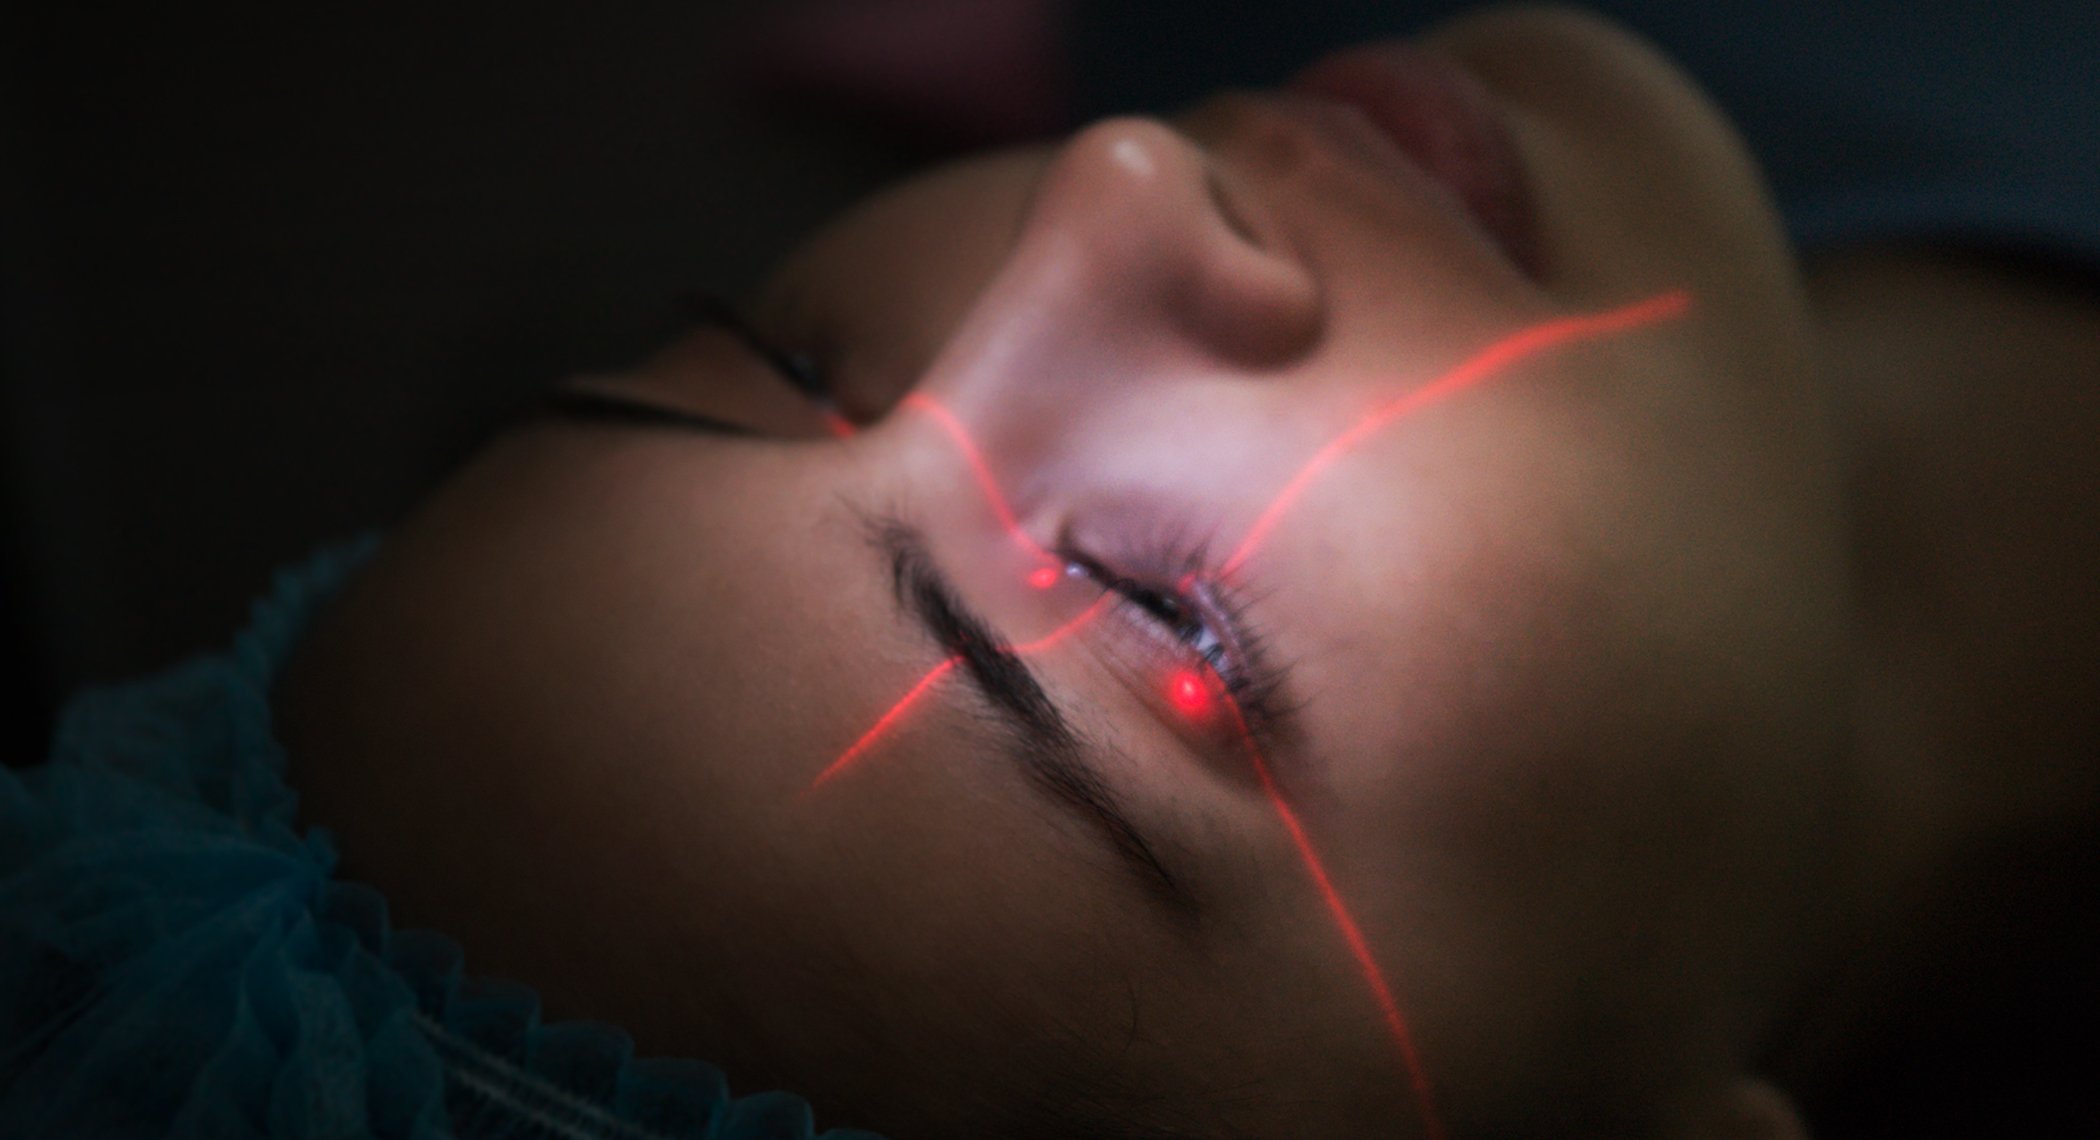 Actress/Beauty Queen Megan Young calmly undergo the laser part of her procedure with her eyes wide open.